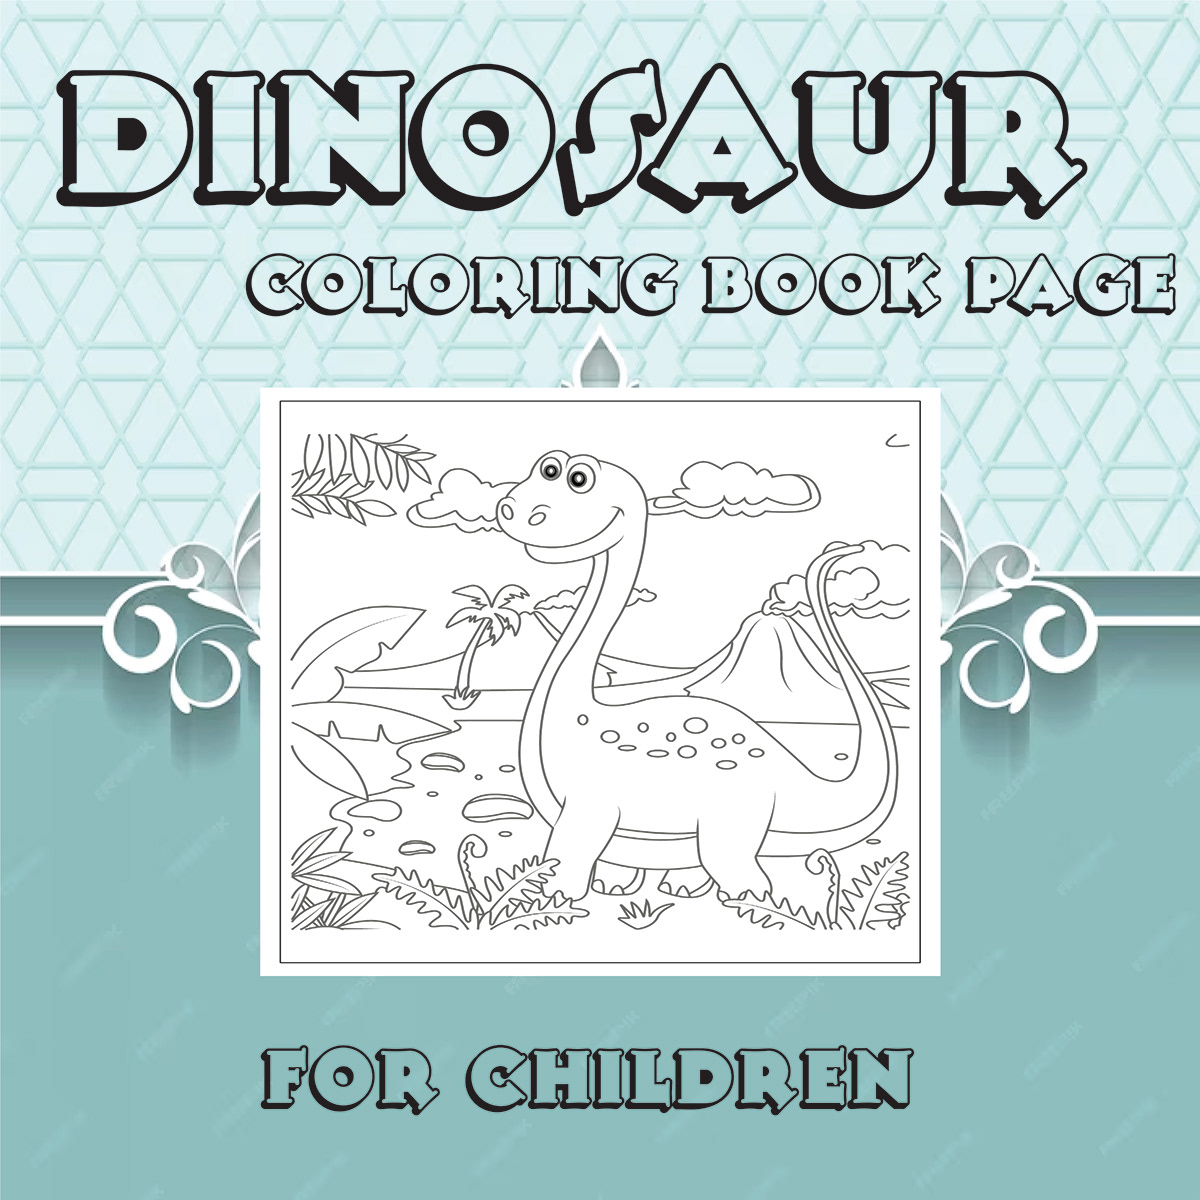 Dinosaur dinosaurs jurassic арт ILLUSTRATION  coloringbook coloring book page jurassicpark